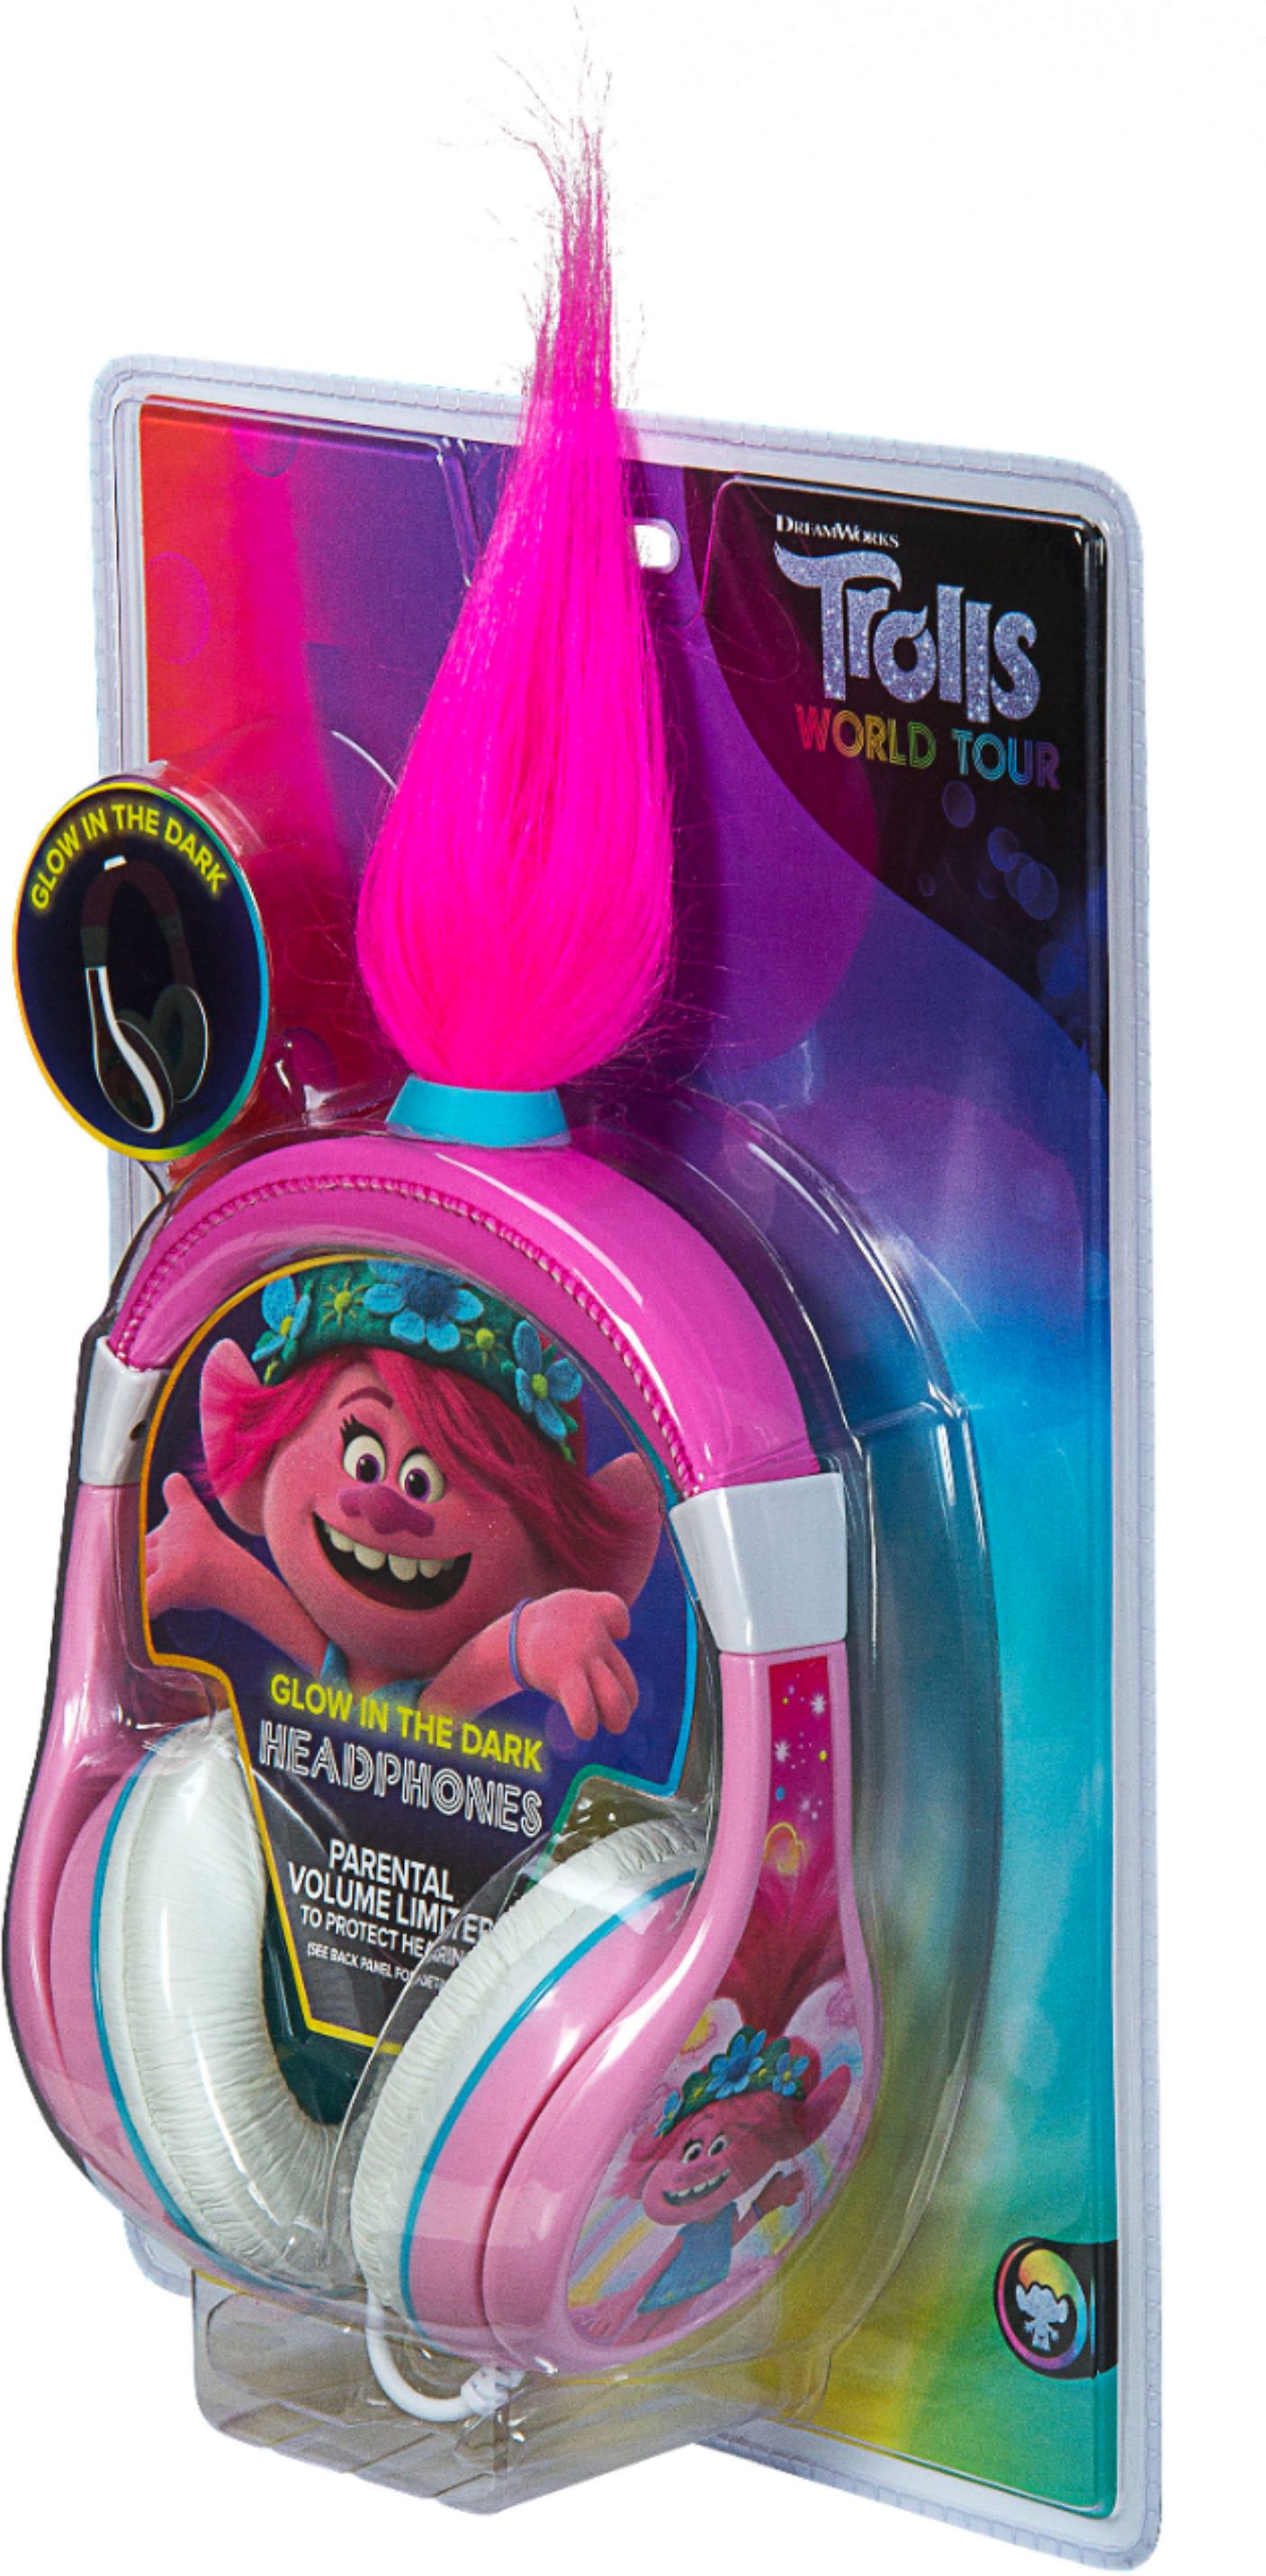 Trolls 2 World Tour Headphones in Pink with Glow in The Dark Parental Control 